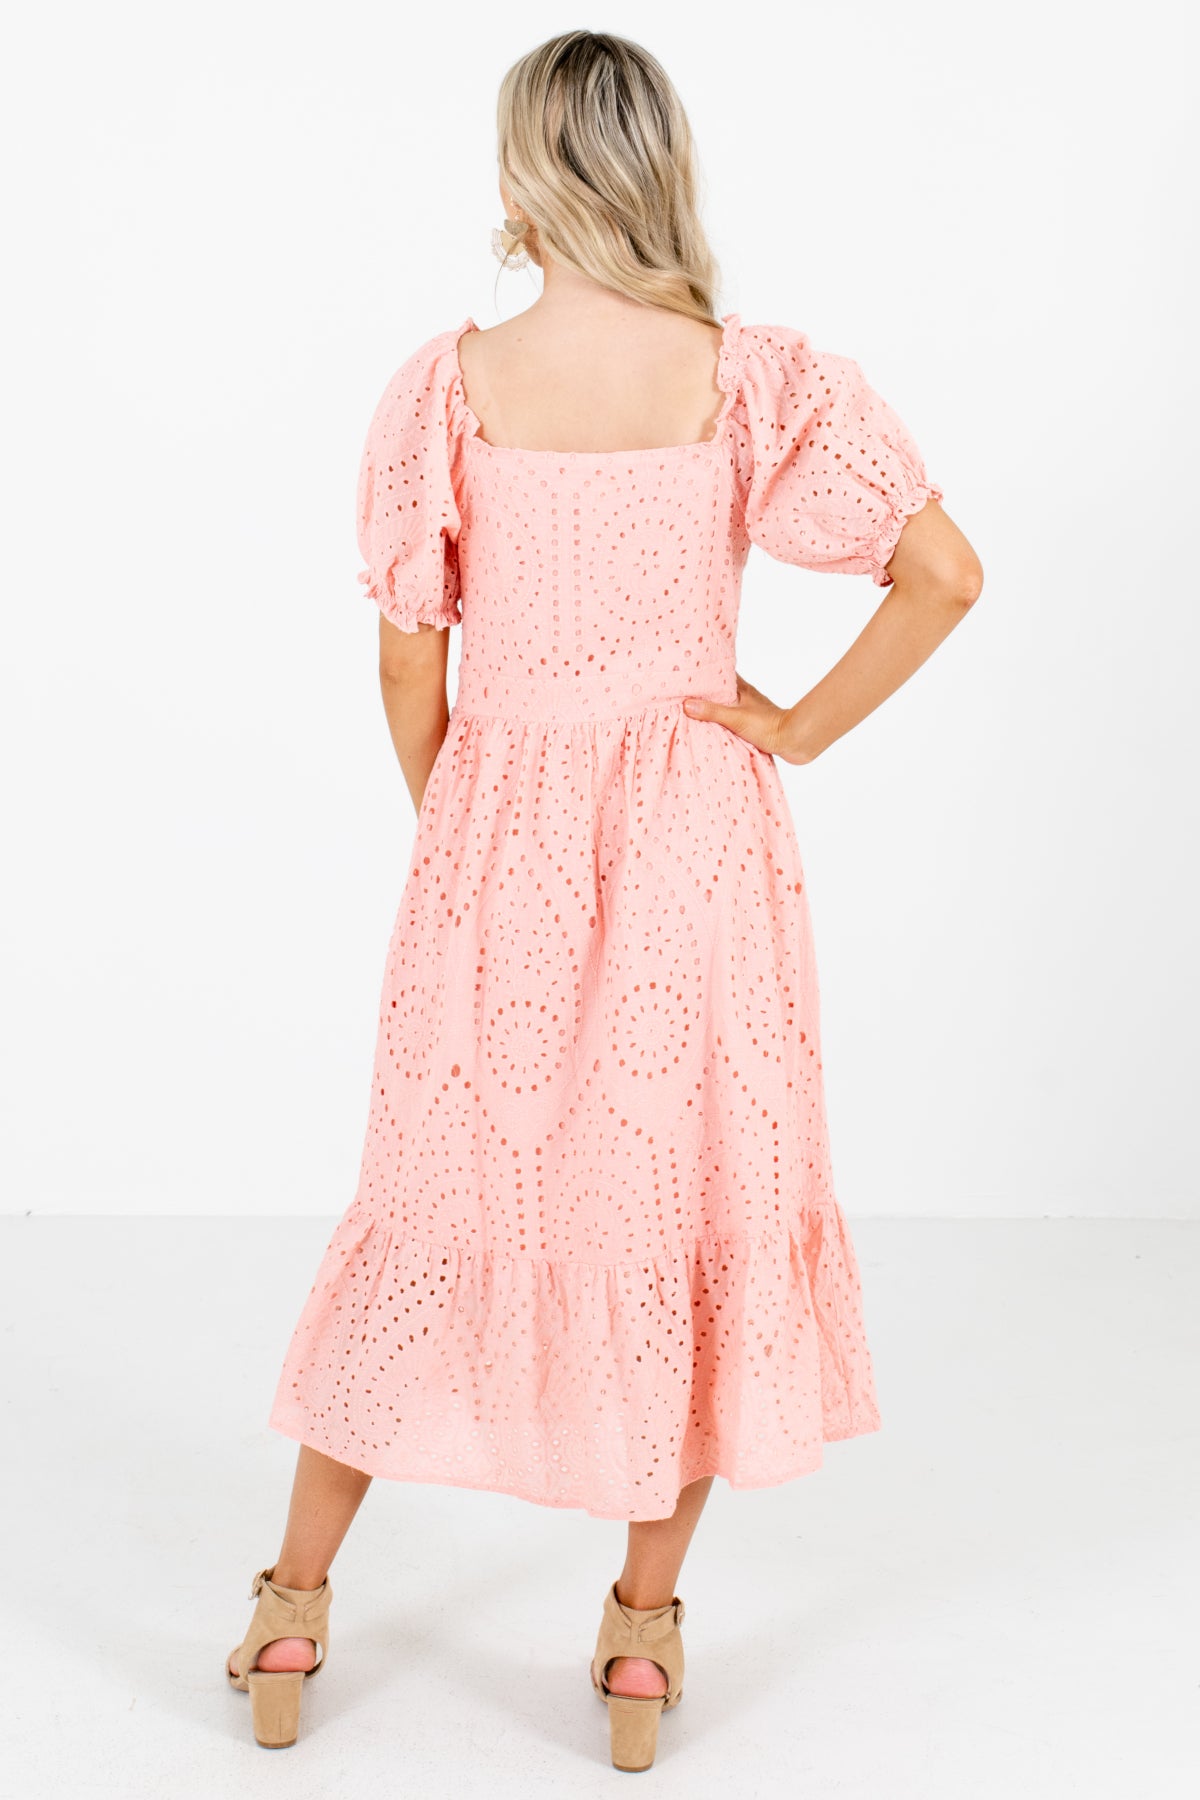 Southern Summer Pink Midi Dress ...